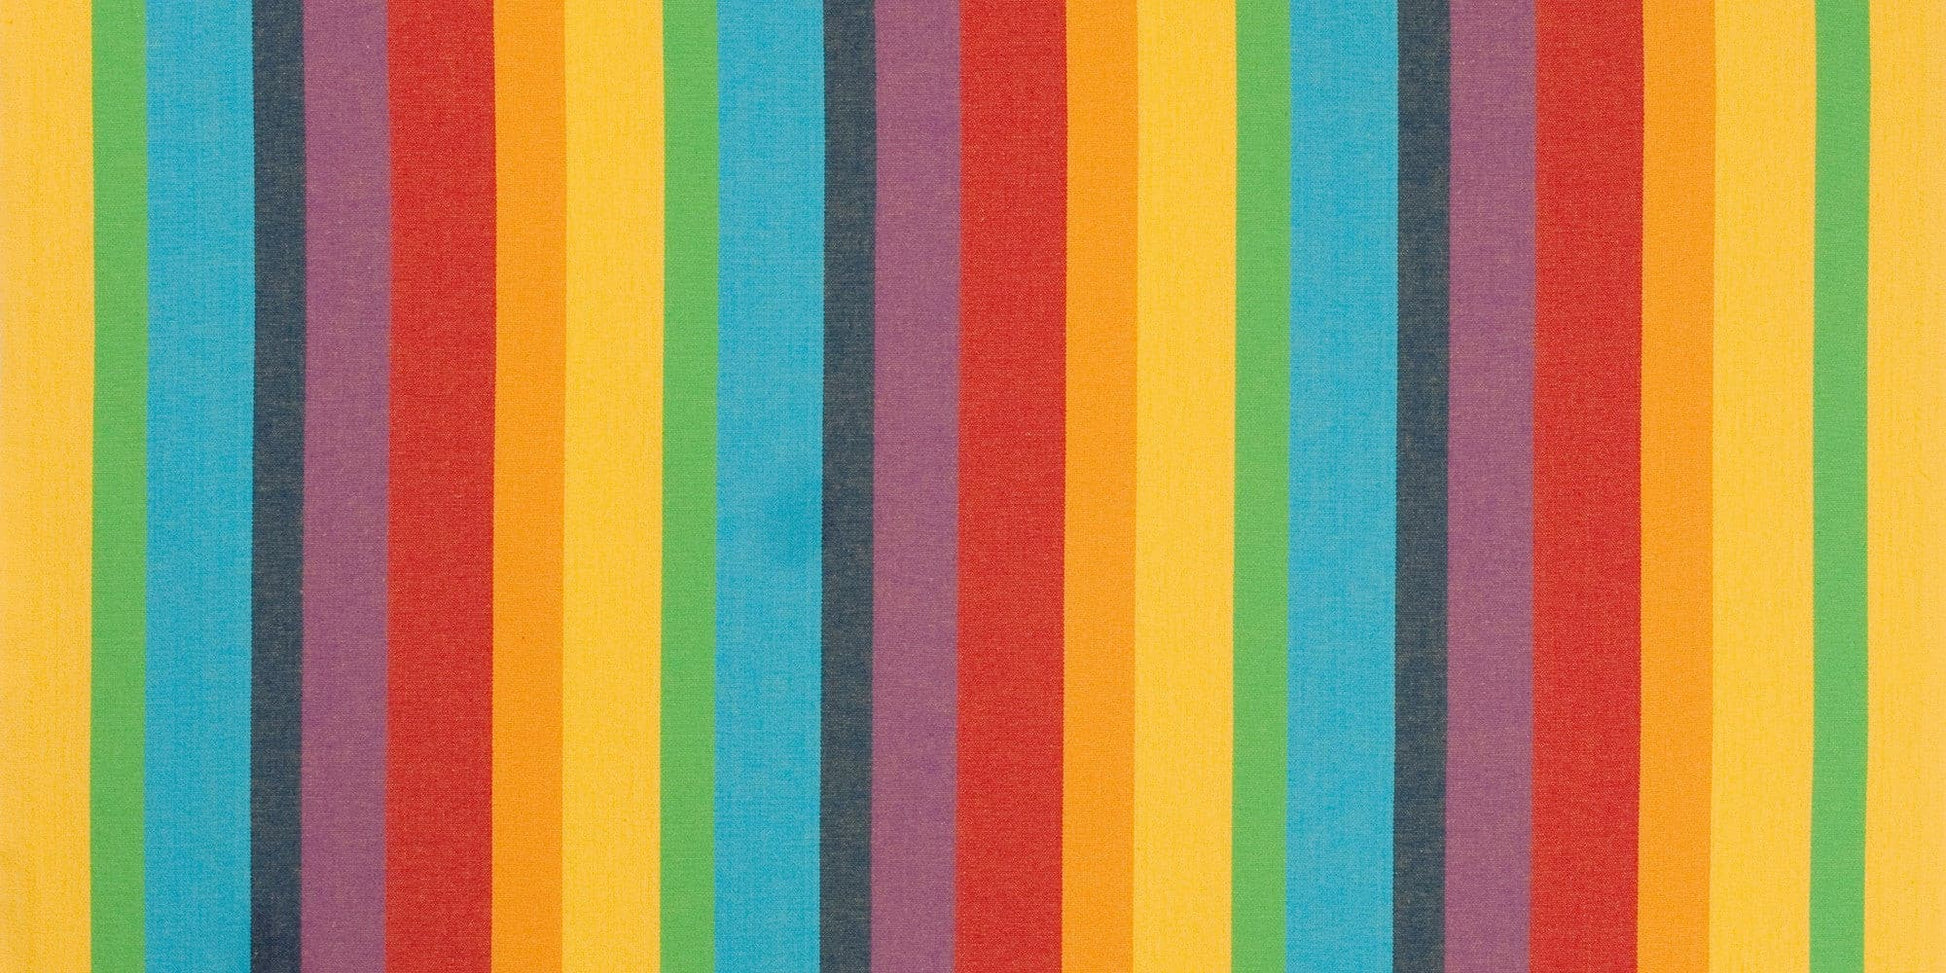 Iri Rainbow - Hamac enfant en coton